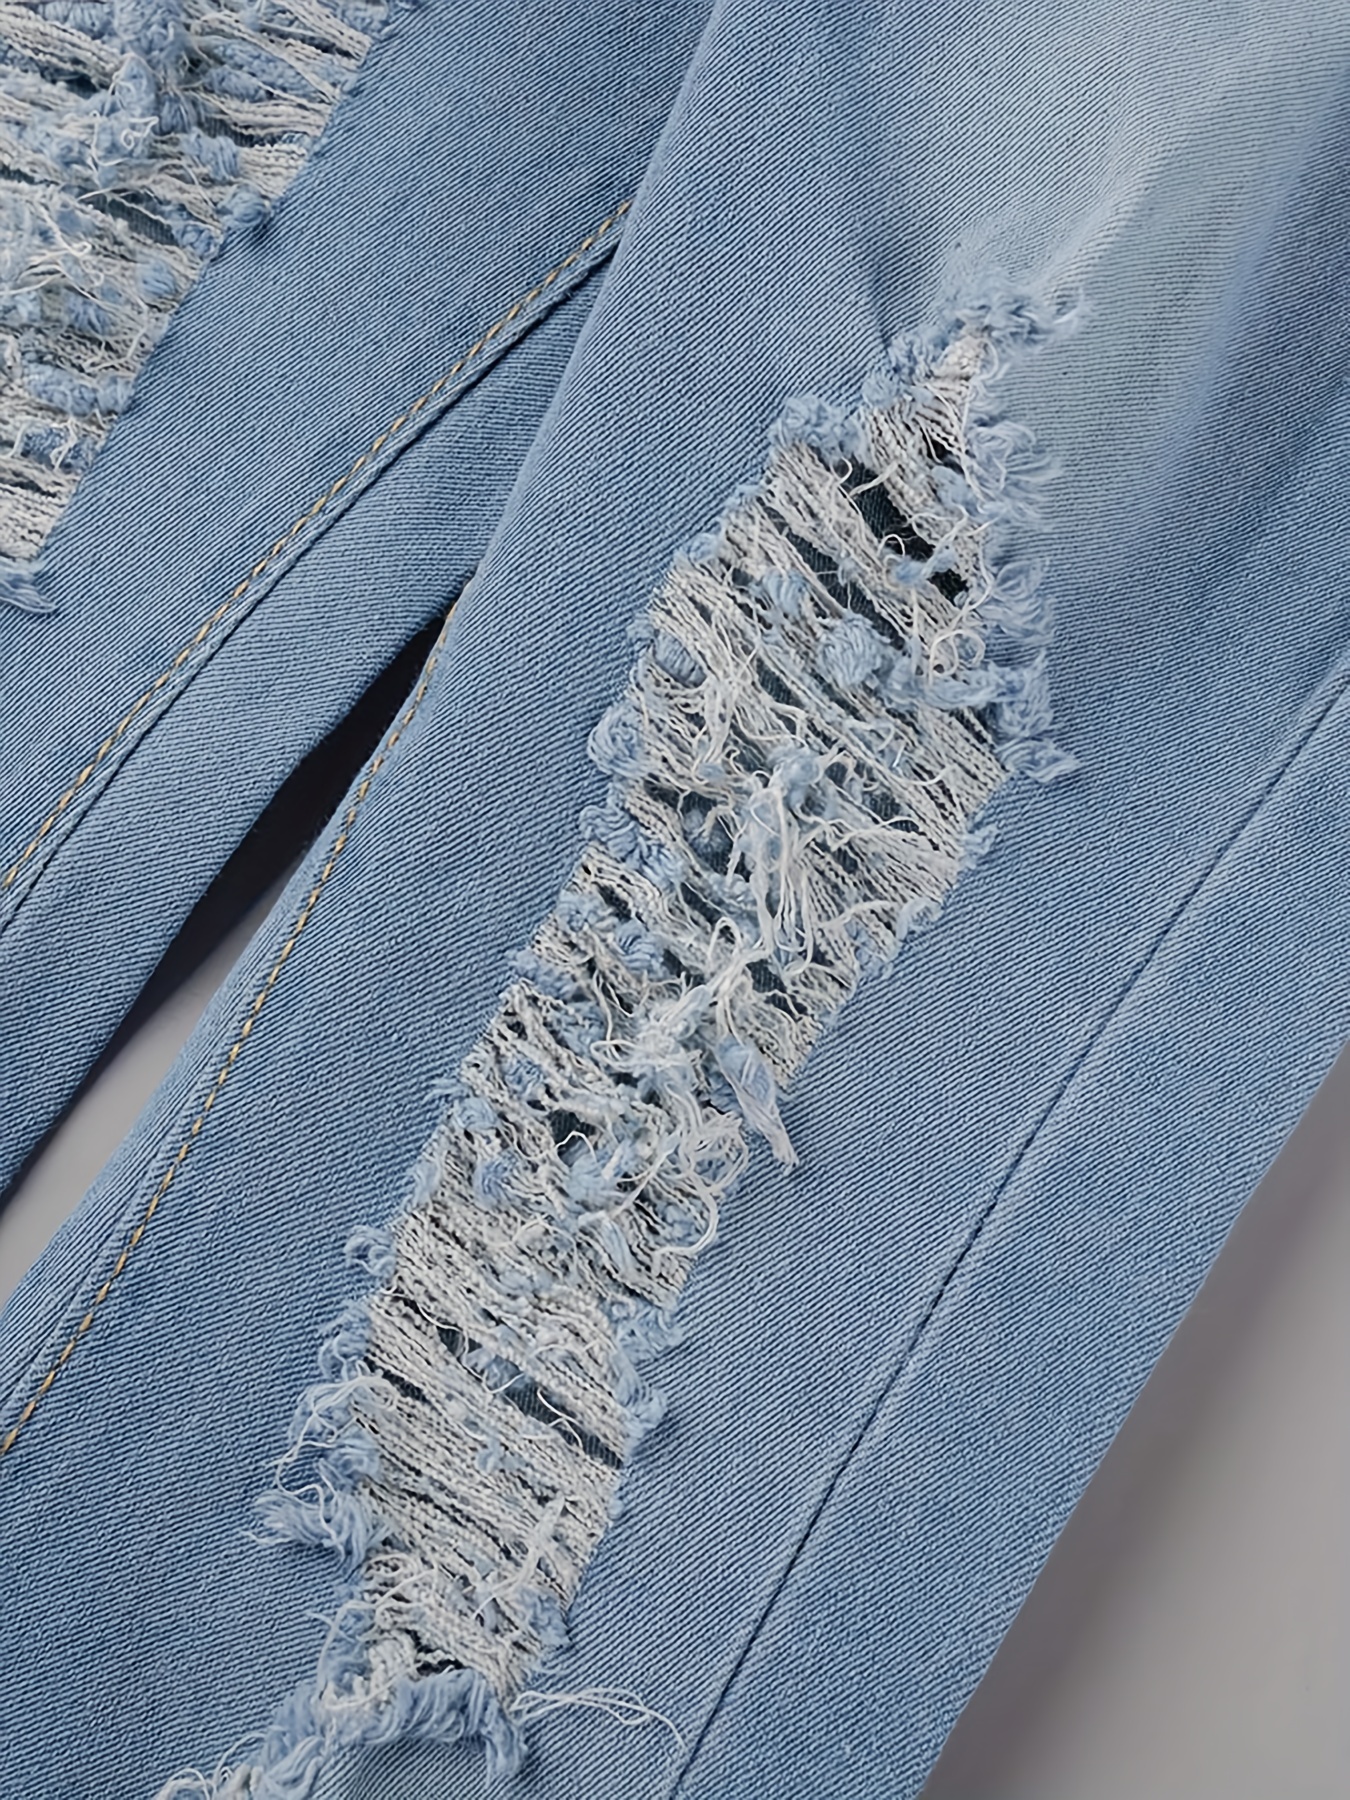 Women Stretch Distressed Ripped Blue Skinny Denim Jeans Pants Cotton Hole –  Essish